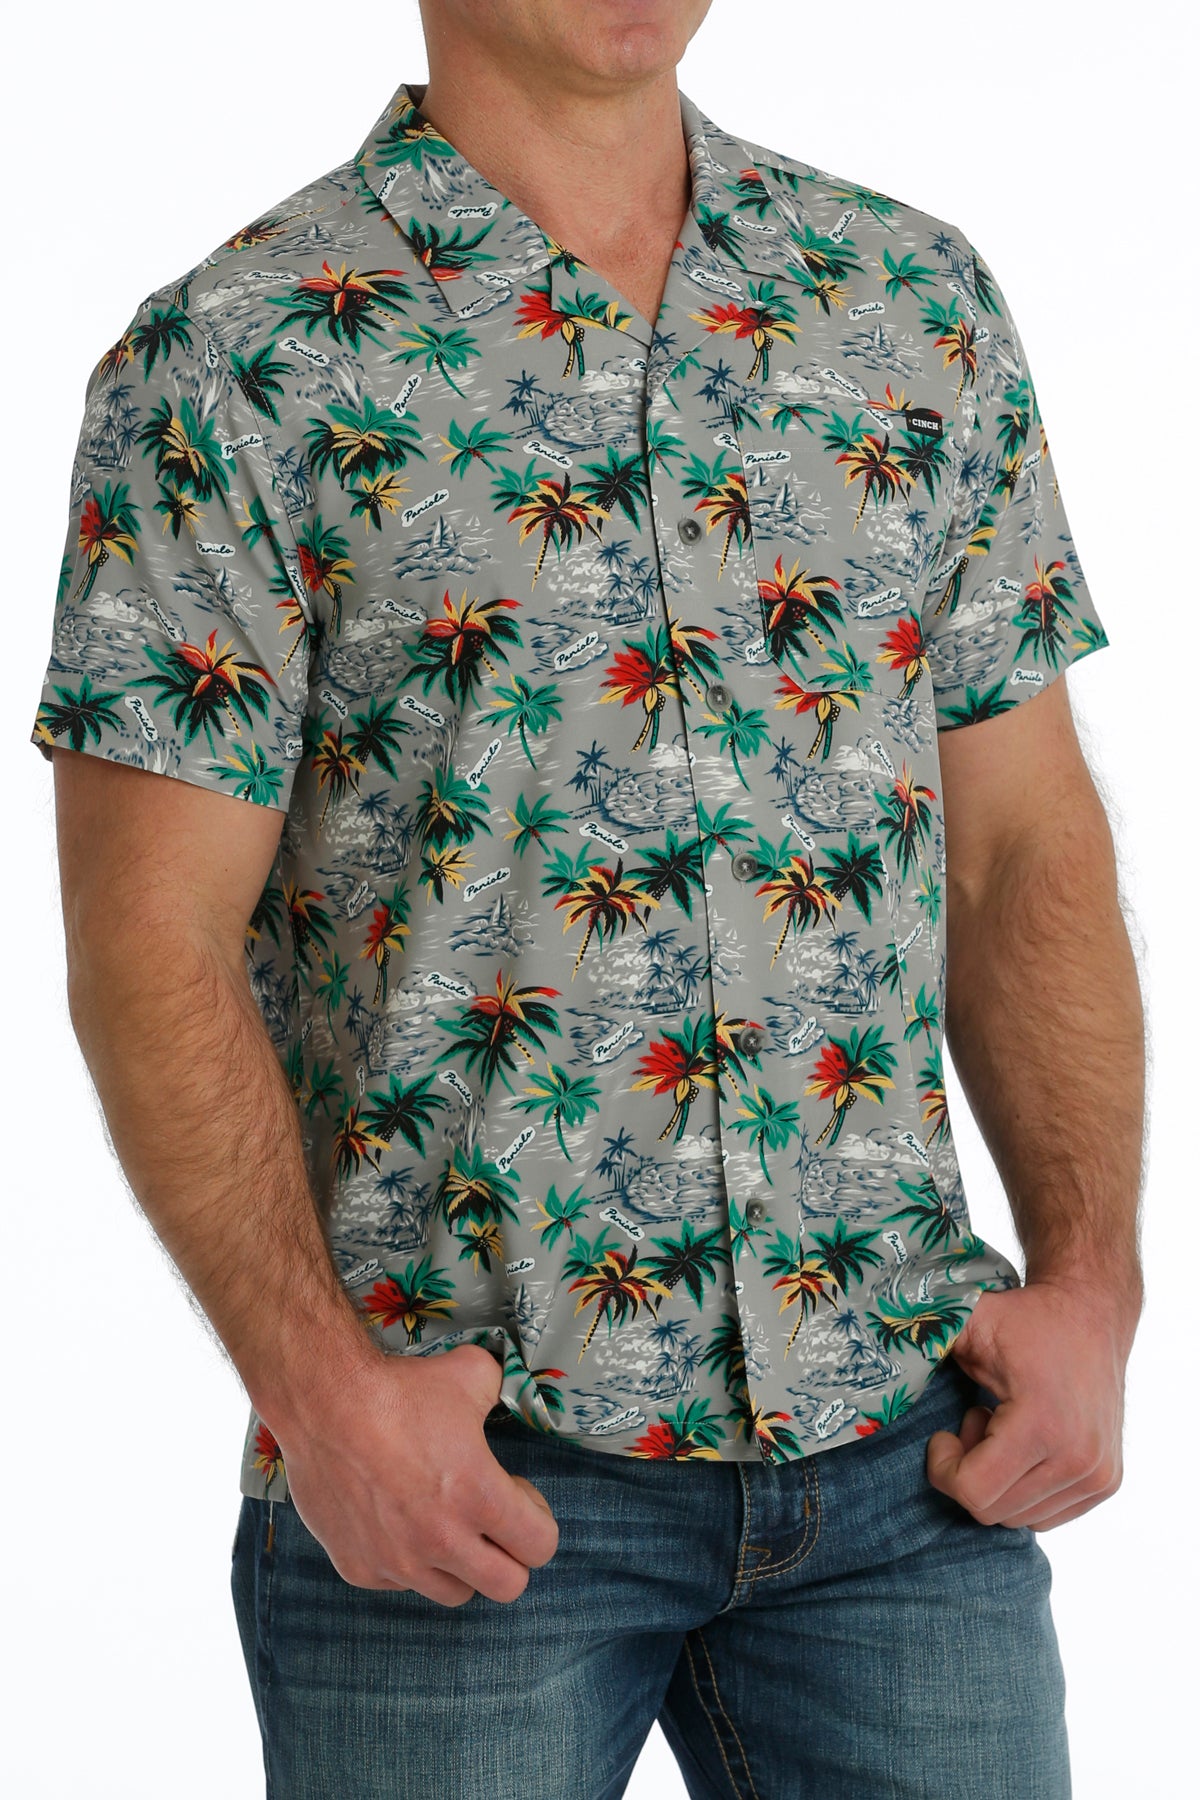 Cinch Men's Grey Hawaiian Camp Shirt